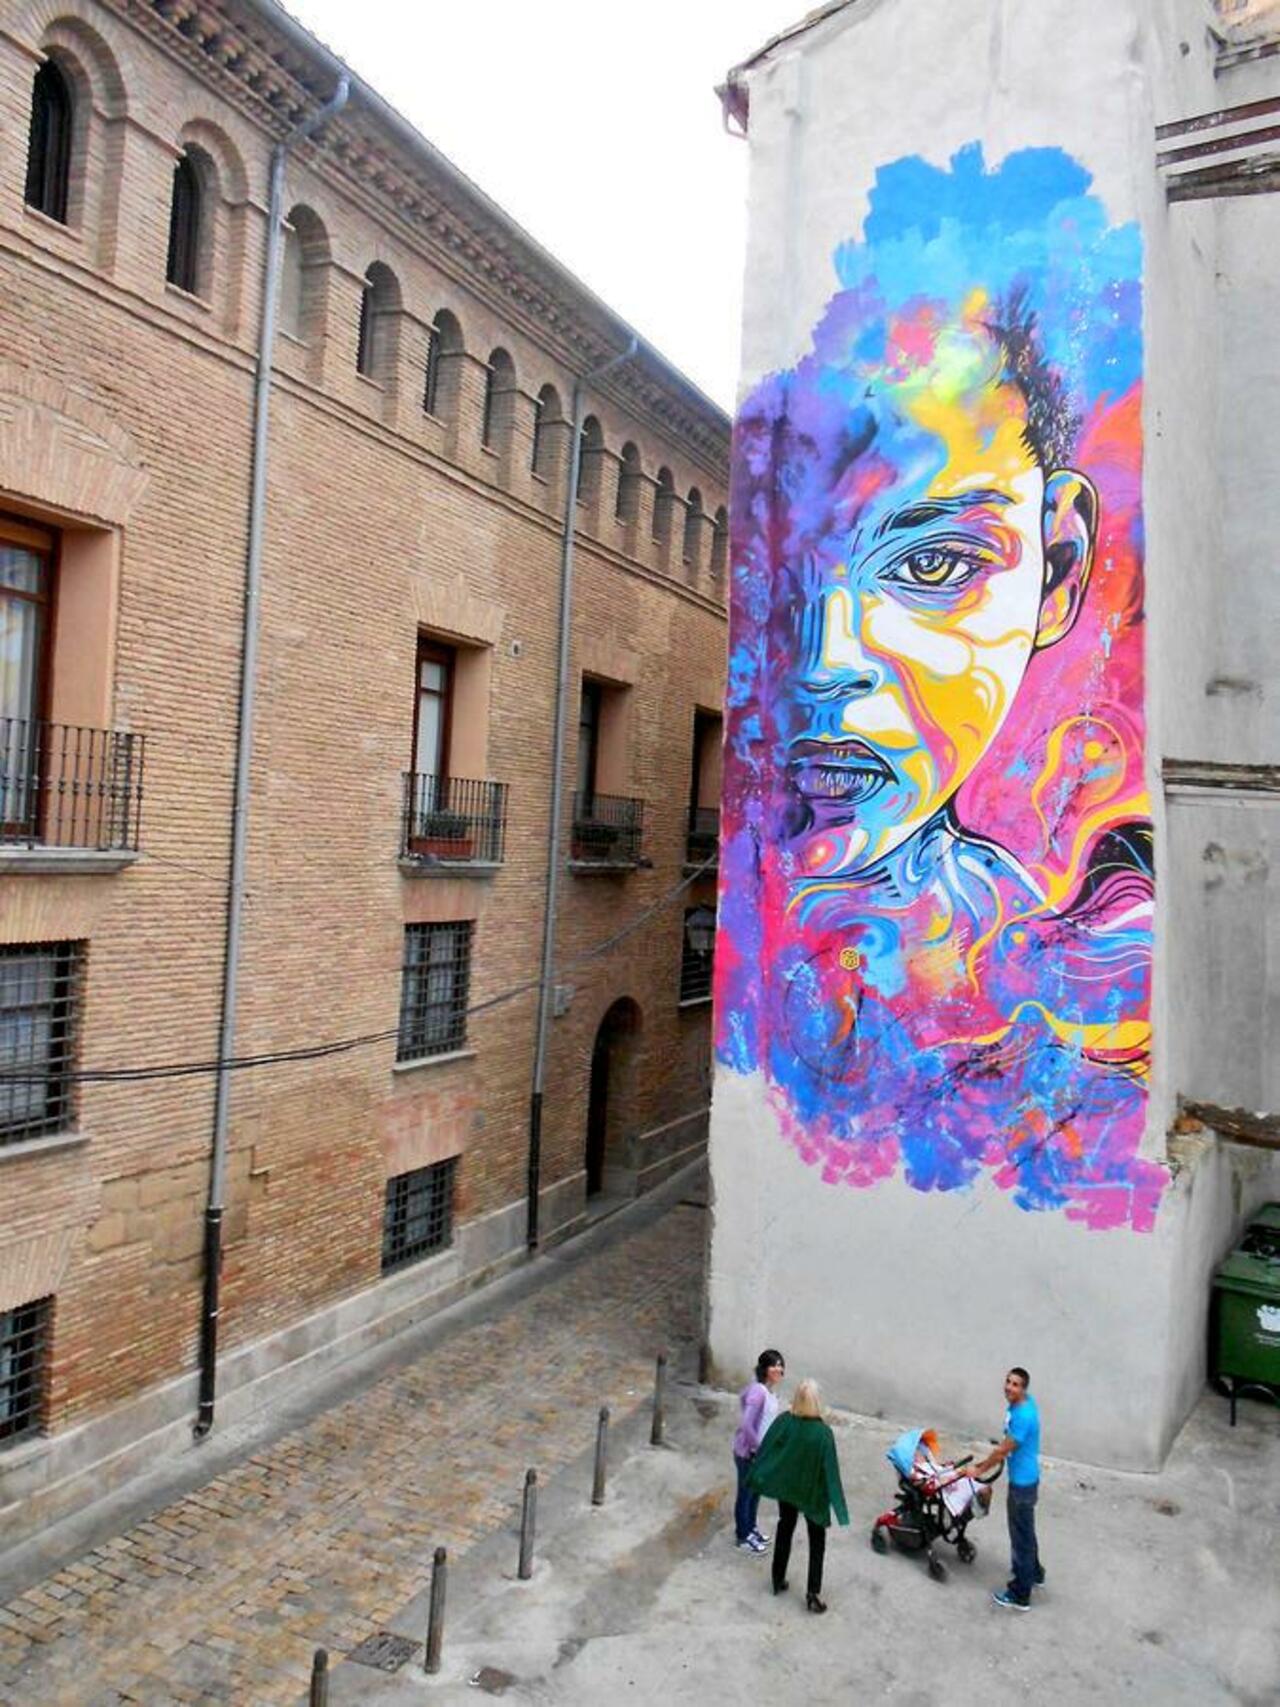 "@Pitchuskita: C215
Barcelona
#streetart #art #graffiti #mural http://t.co/pbxlotjKqB"